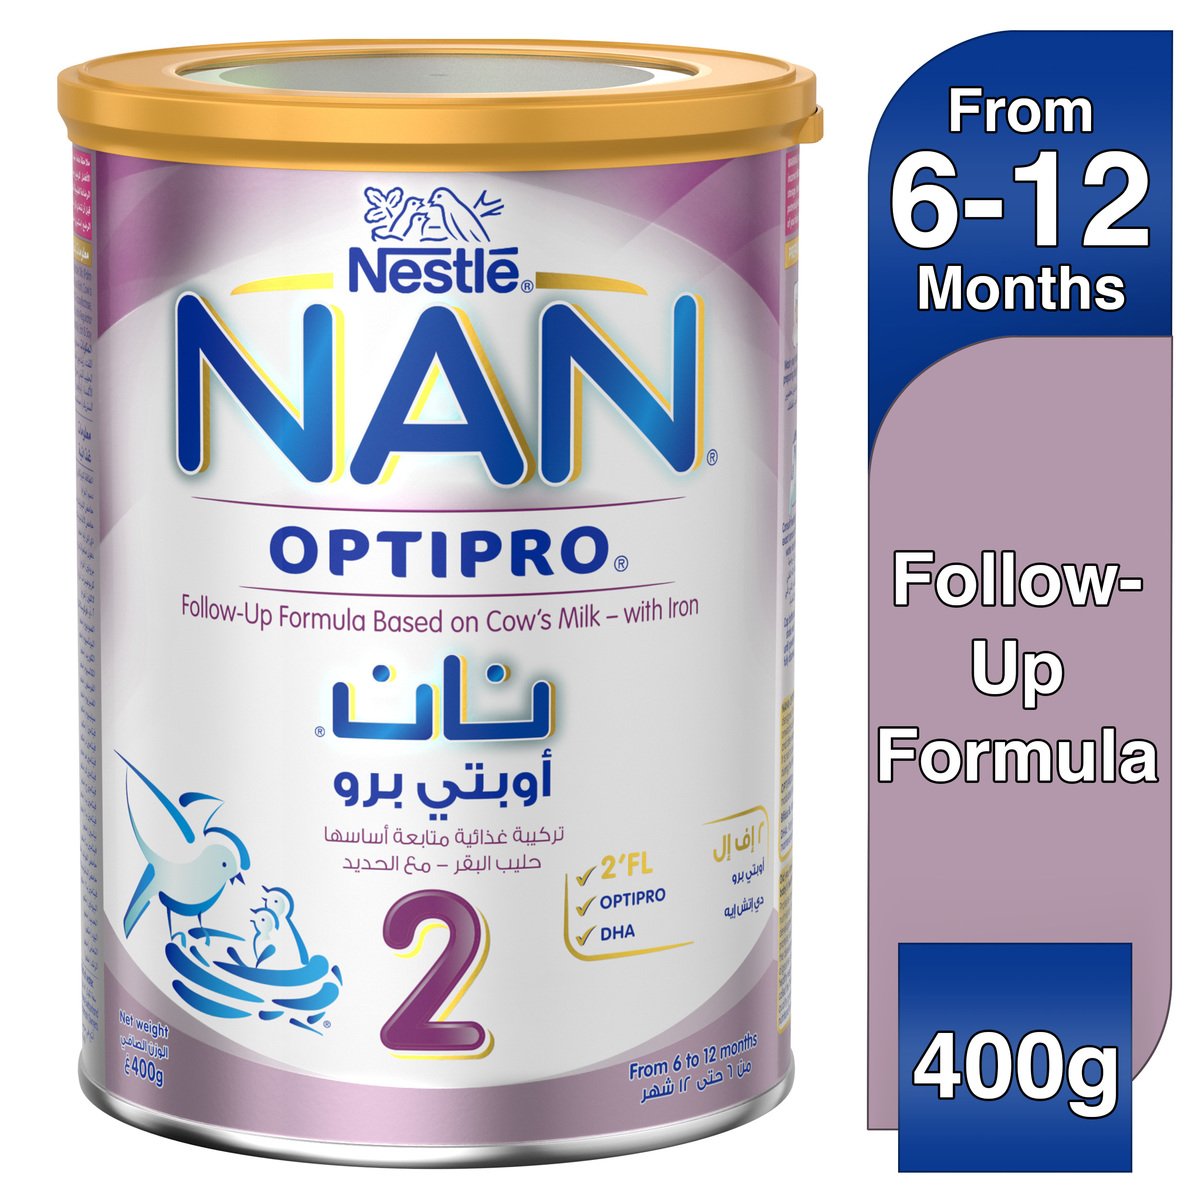 Nestlé NAN Optipro 2 Follow-Up Infant Formula (6 to 12 months) 1.8